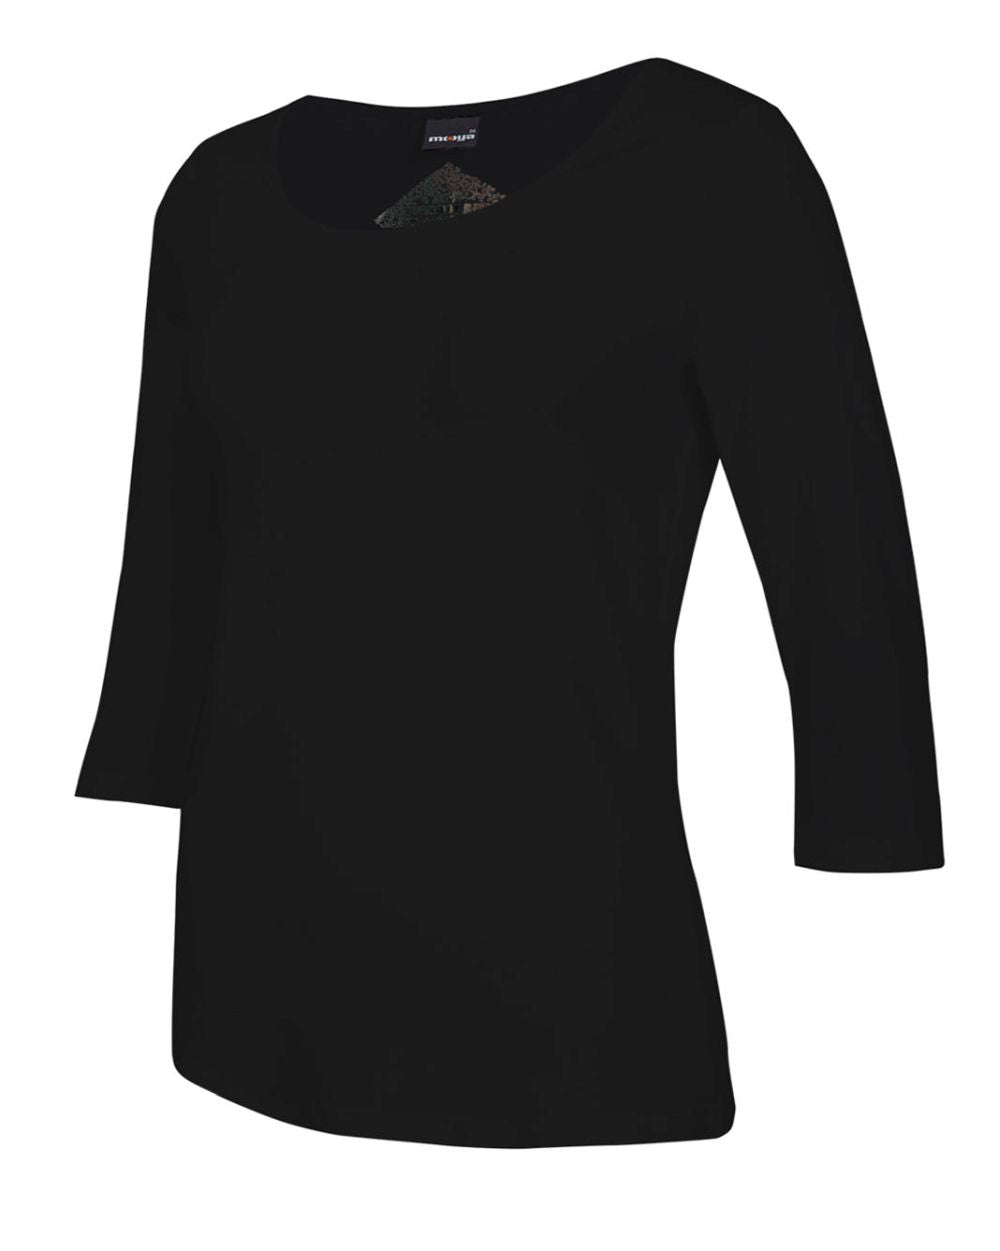 Damen-Shirt Angela, 3/4-Arm, Rundhalsausschnitt, Farbe Black